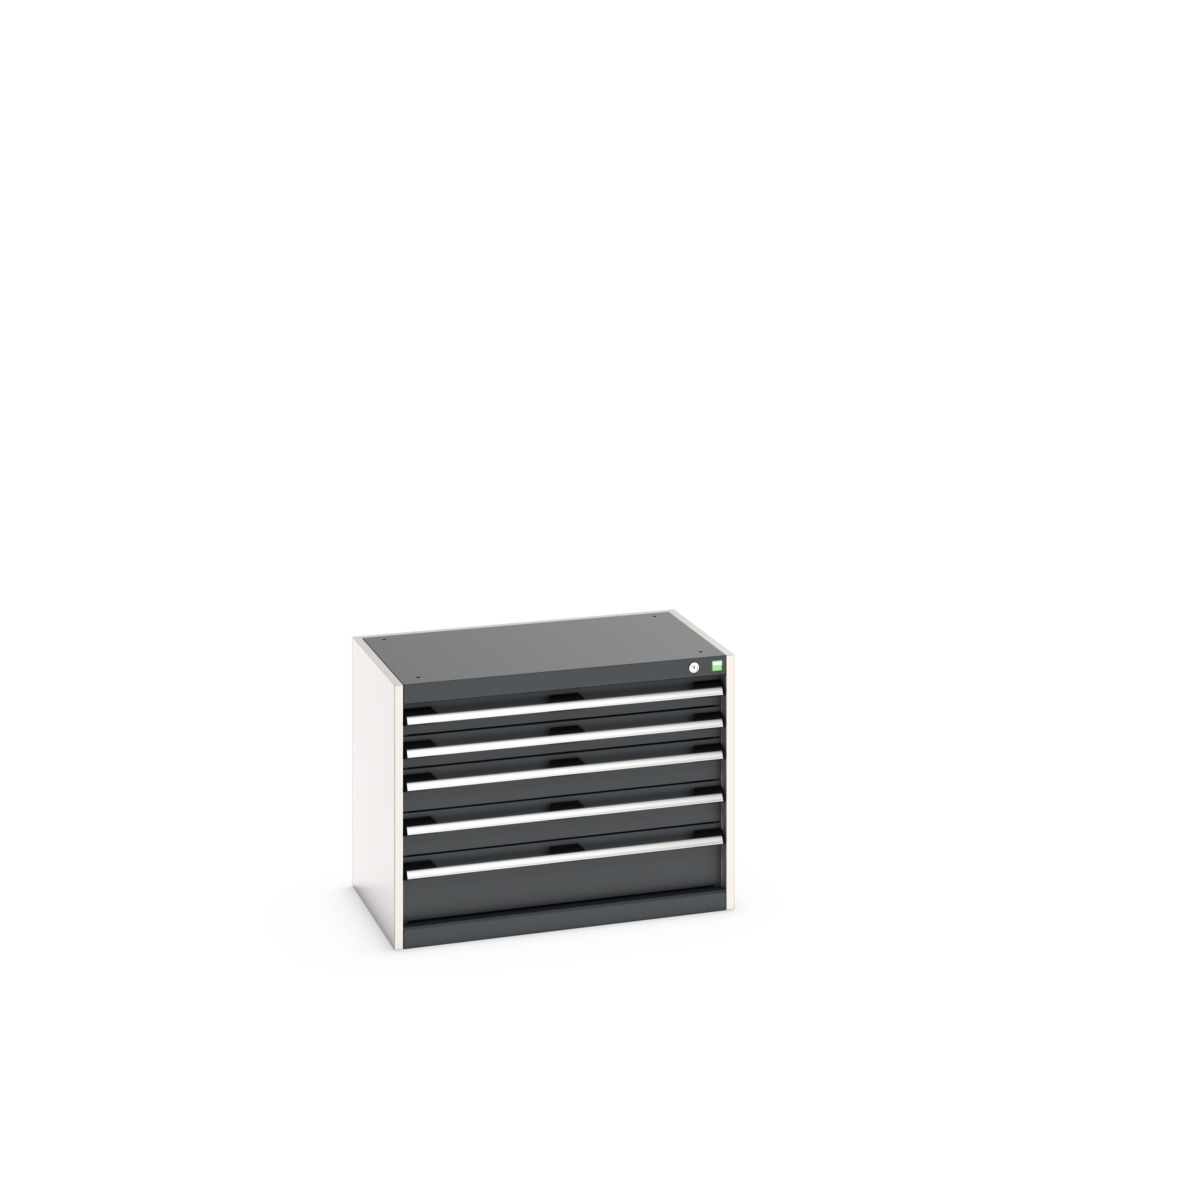 40012005. - cubio drawer cabinet